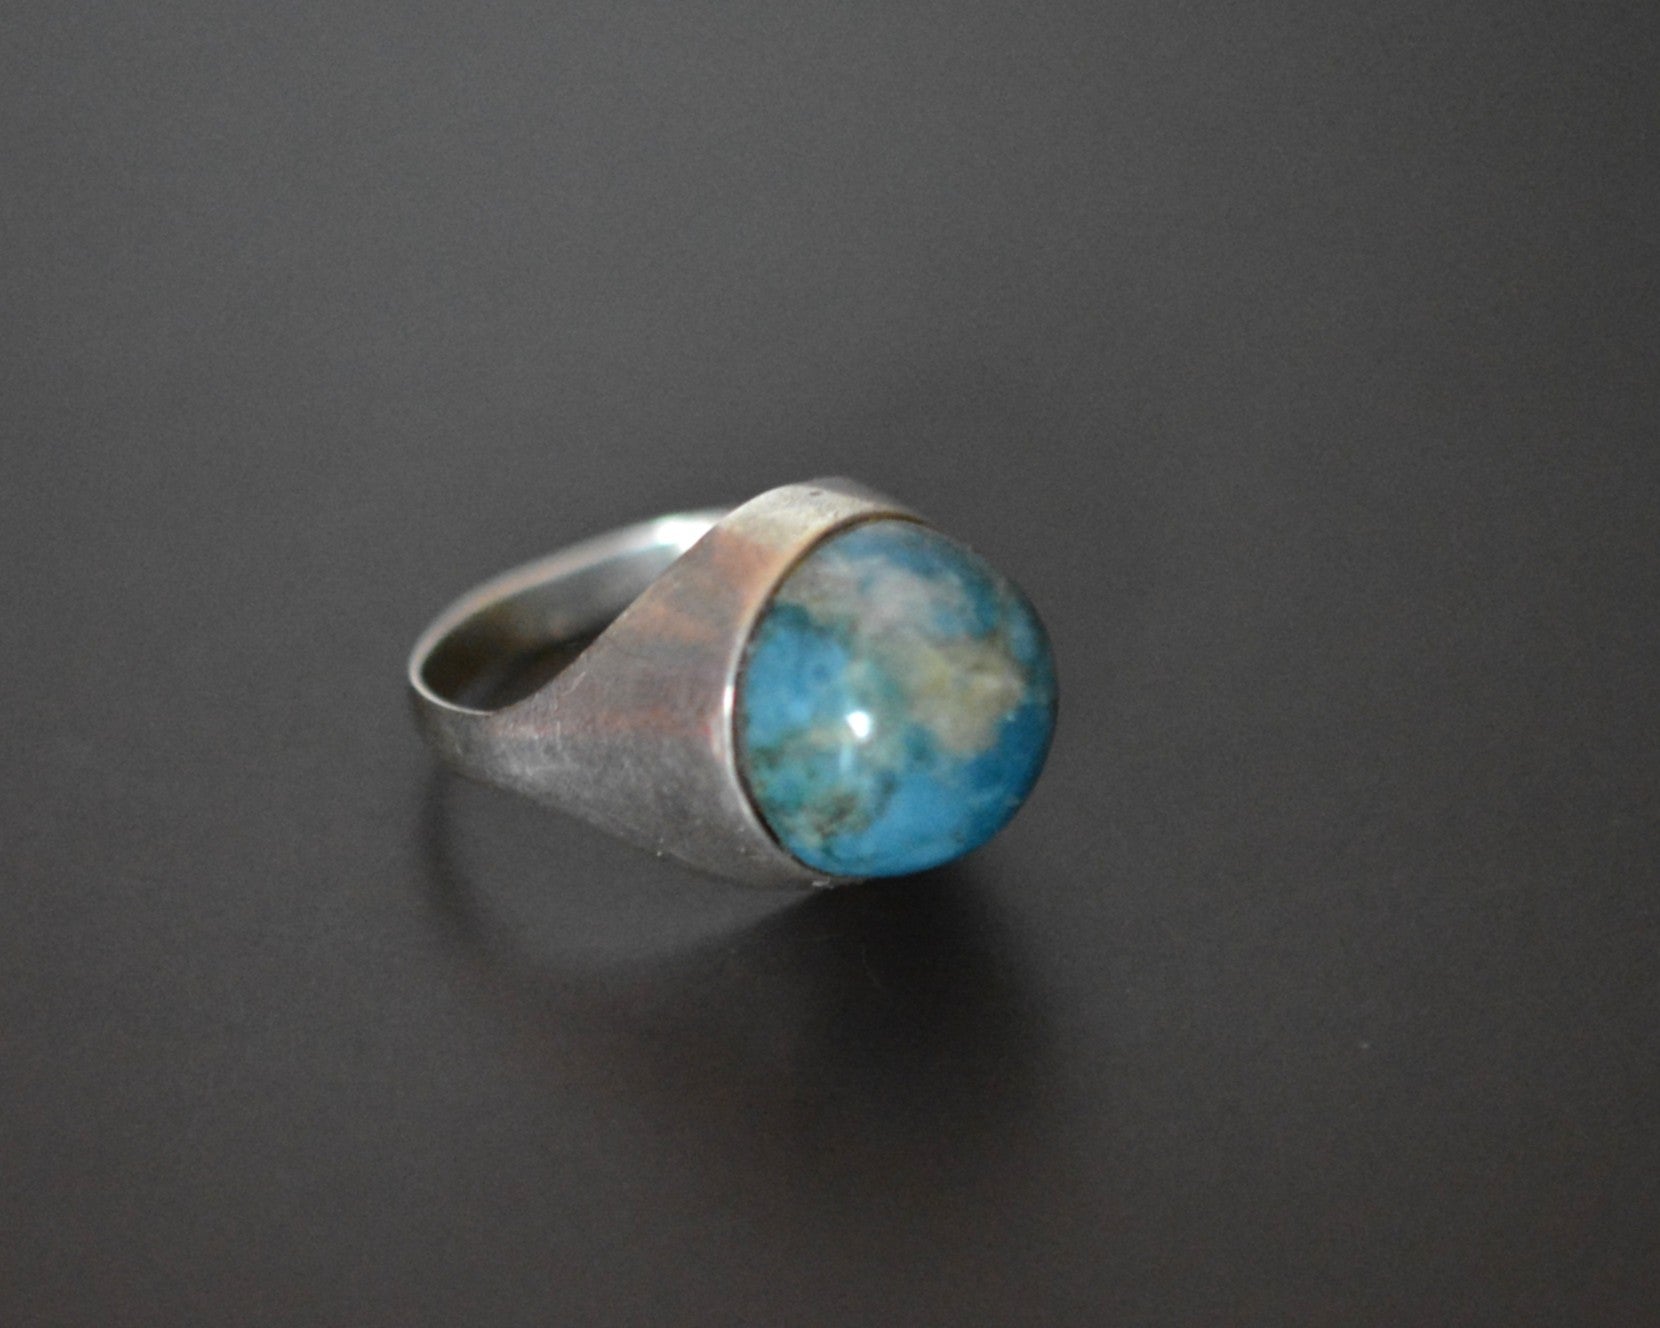 Ethnic Blue Aventurine Ring from India - Size 7